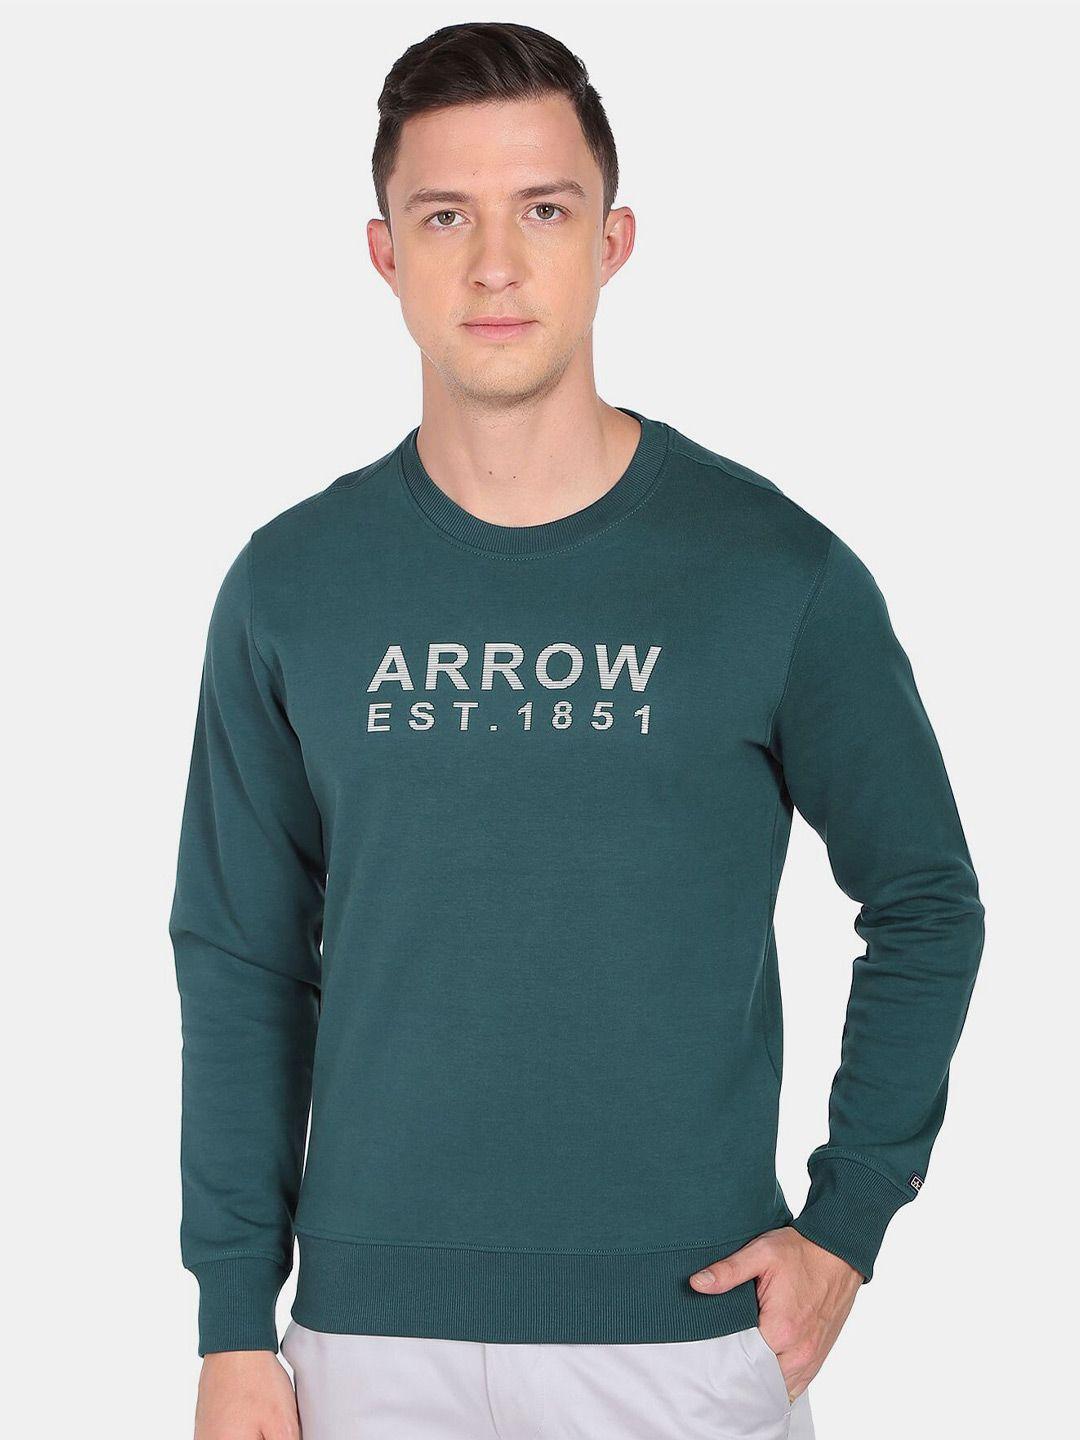 arrow-sport-men-brand-logo-printed-pullover-sweatshirt